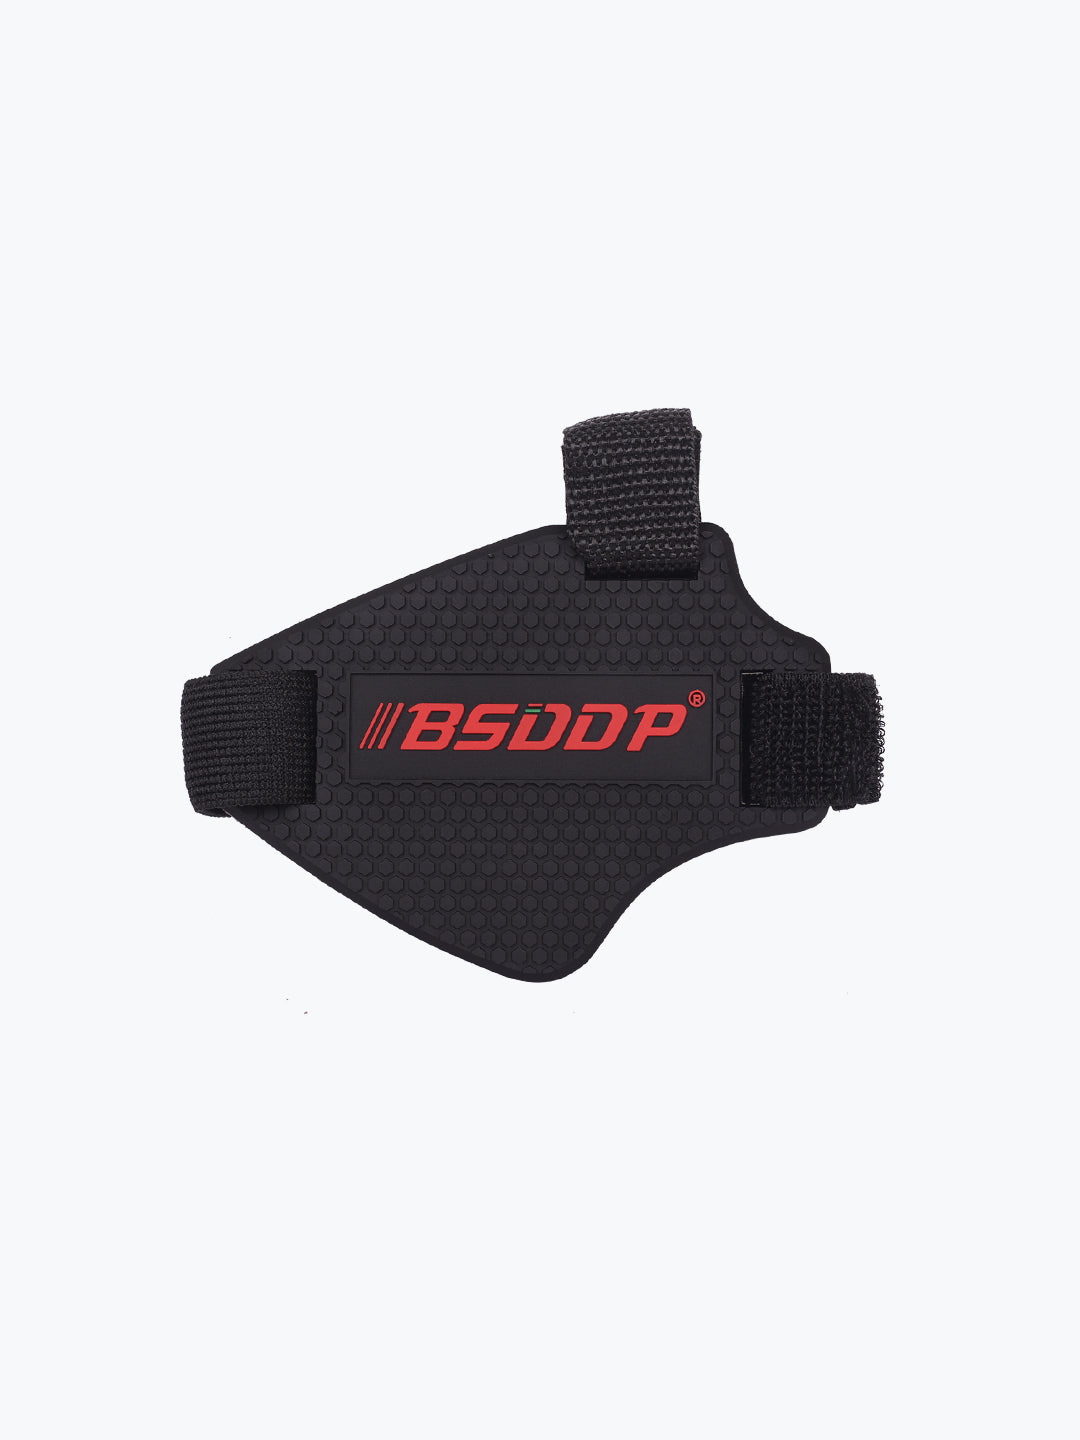 BSDDP Shoe Protector